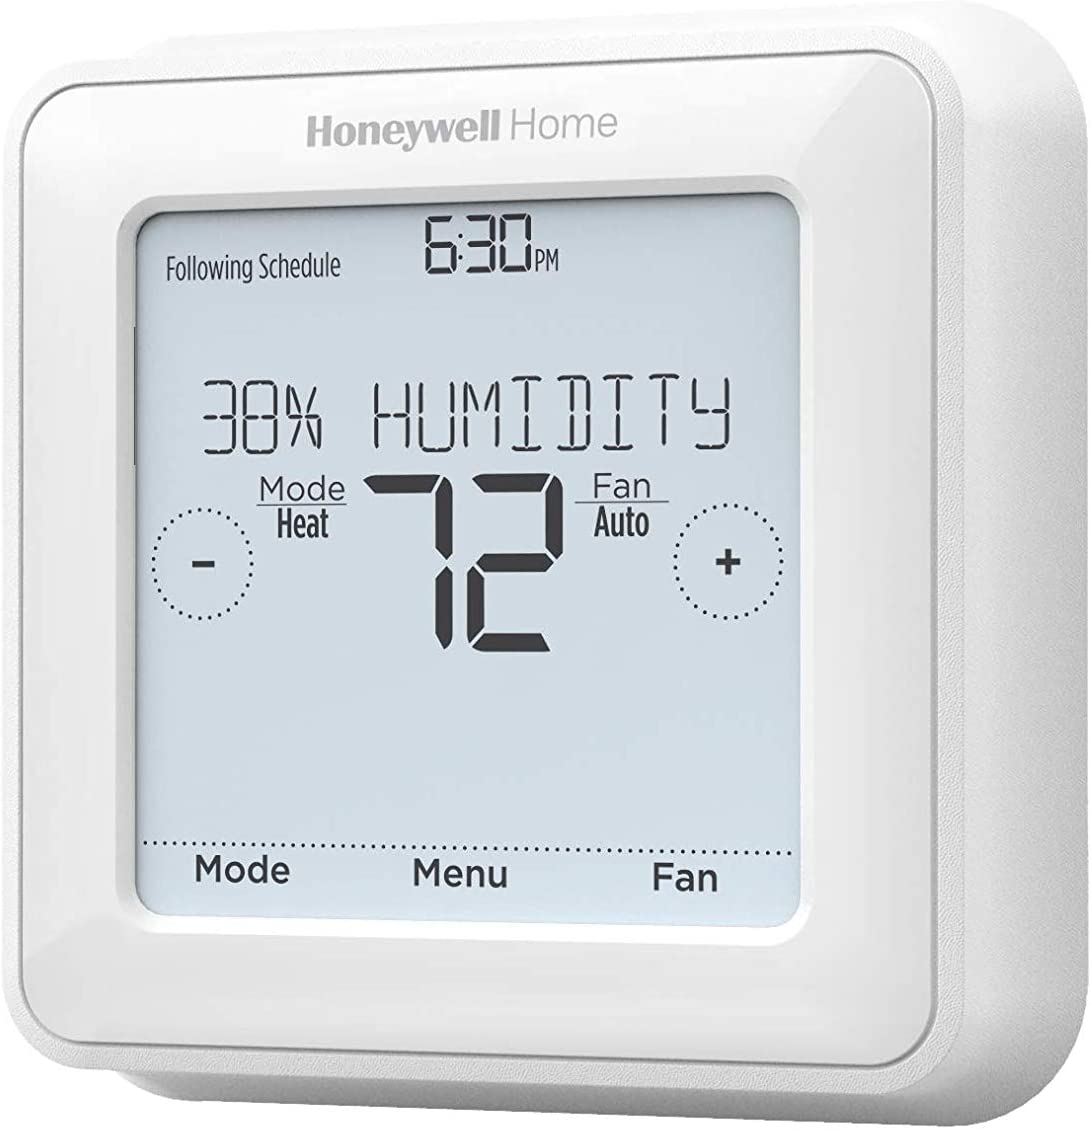 Honeywell Home RENEWRTH8560D 7-Day Programmable Touchscreen Thermosat (Renewed)